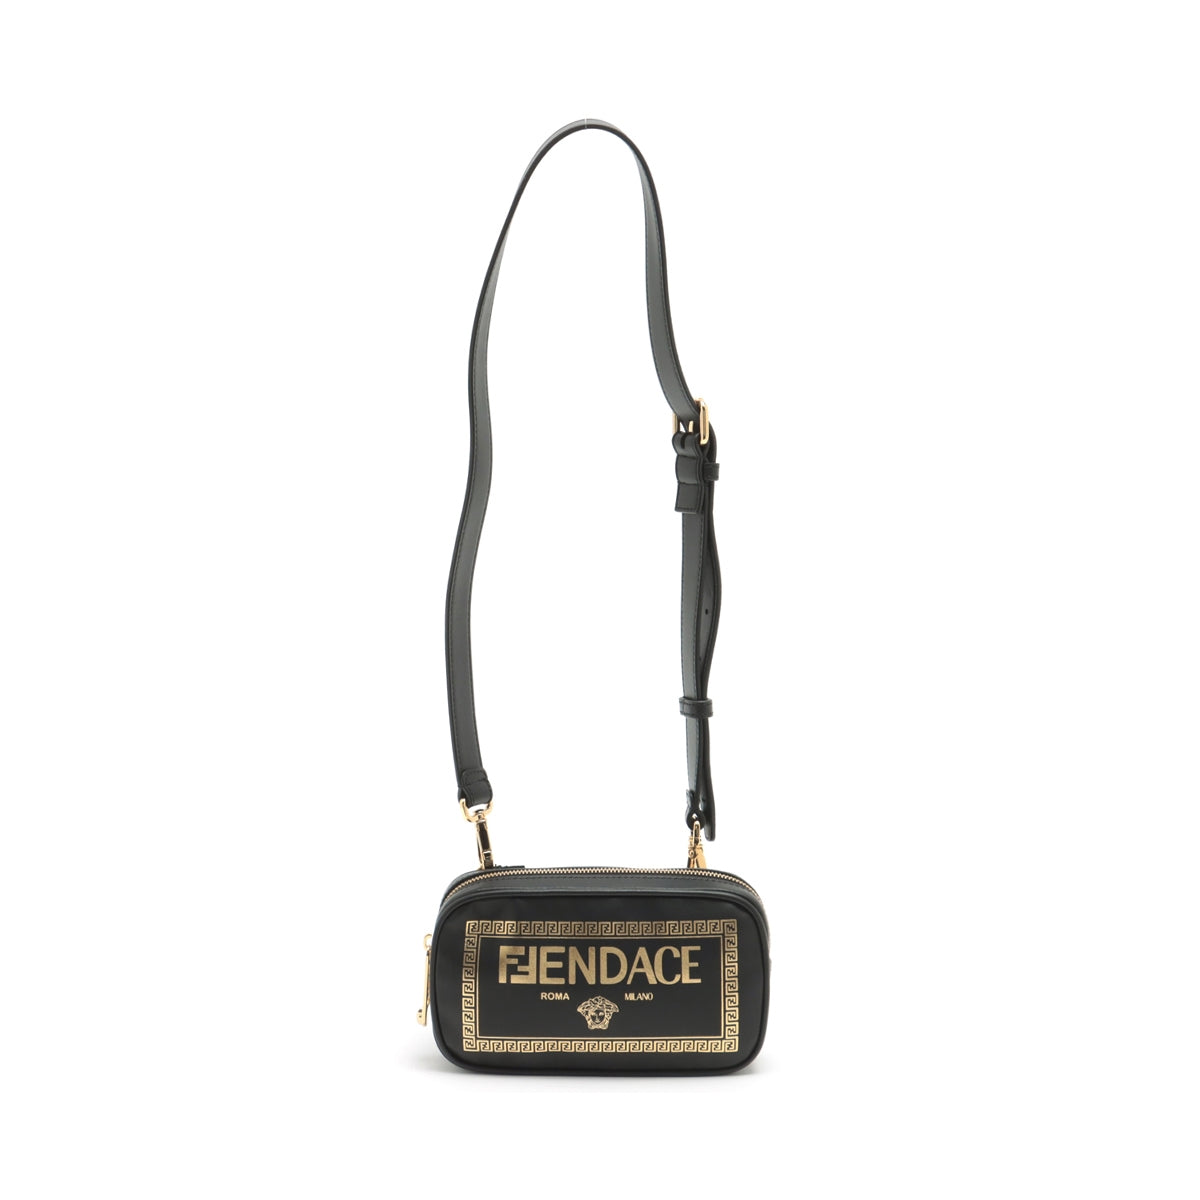 Fendi x Versace Fender Choi Leather Shoulder bag Black There is internal color transfer